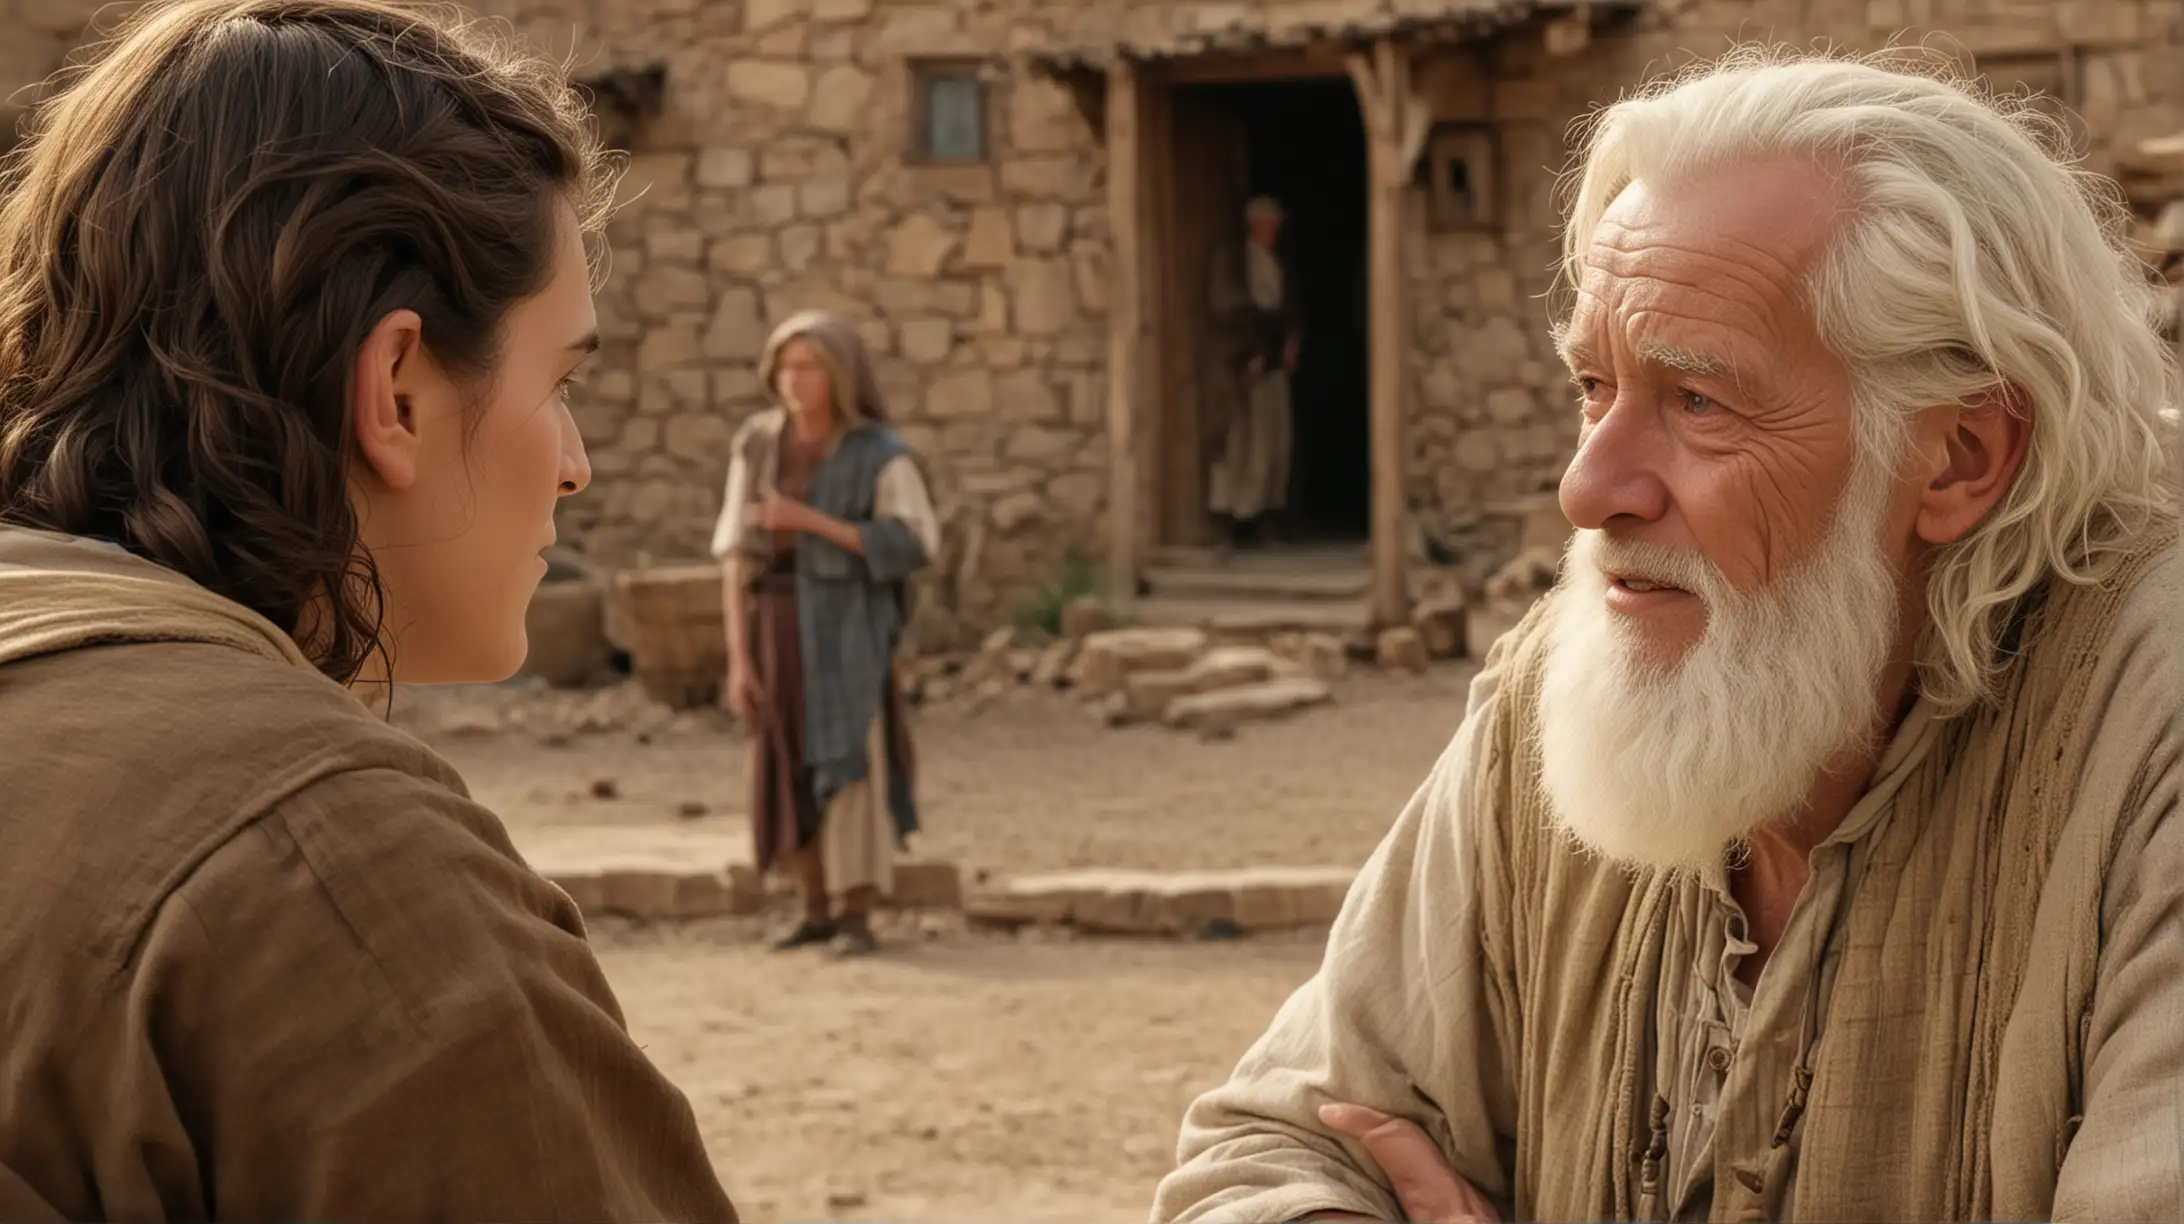 Biblical Era Encounter Young Man Conversing with Elderly Couple in Desert Town